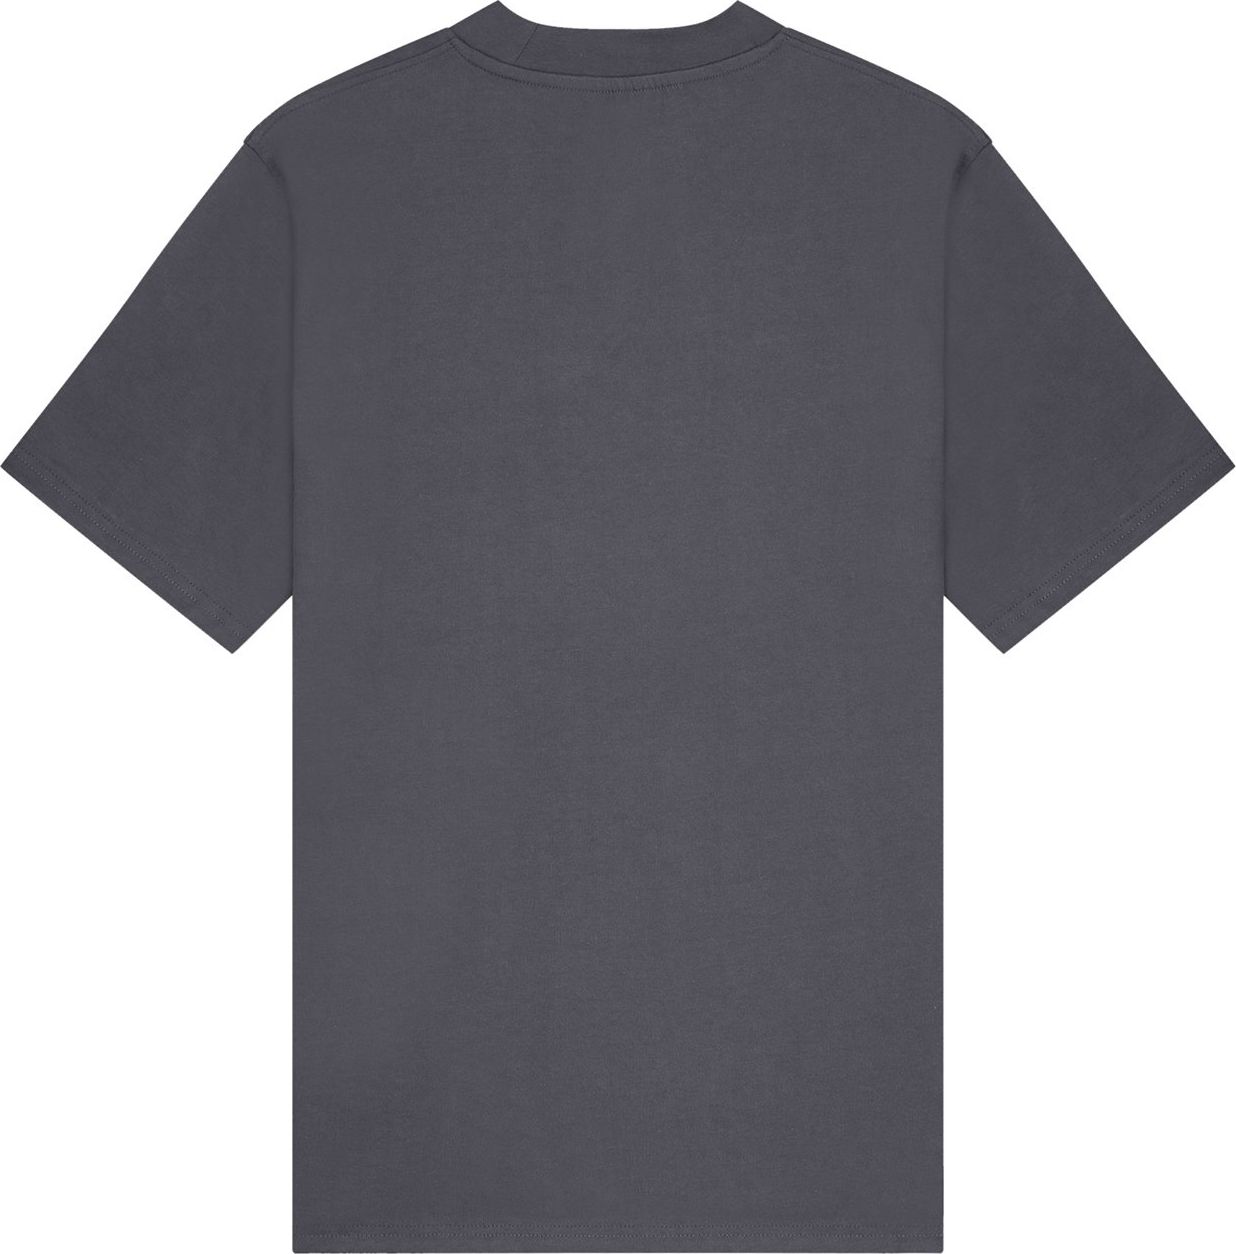 Malelions Unity T-Shirt- Iron Grey/Beige Grijs